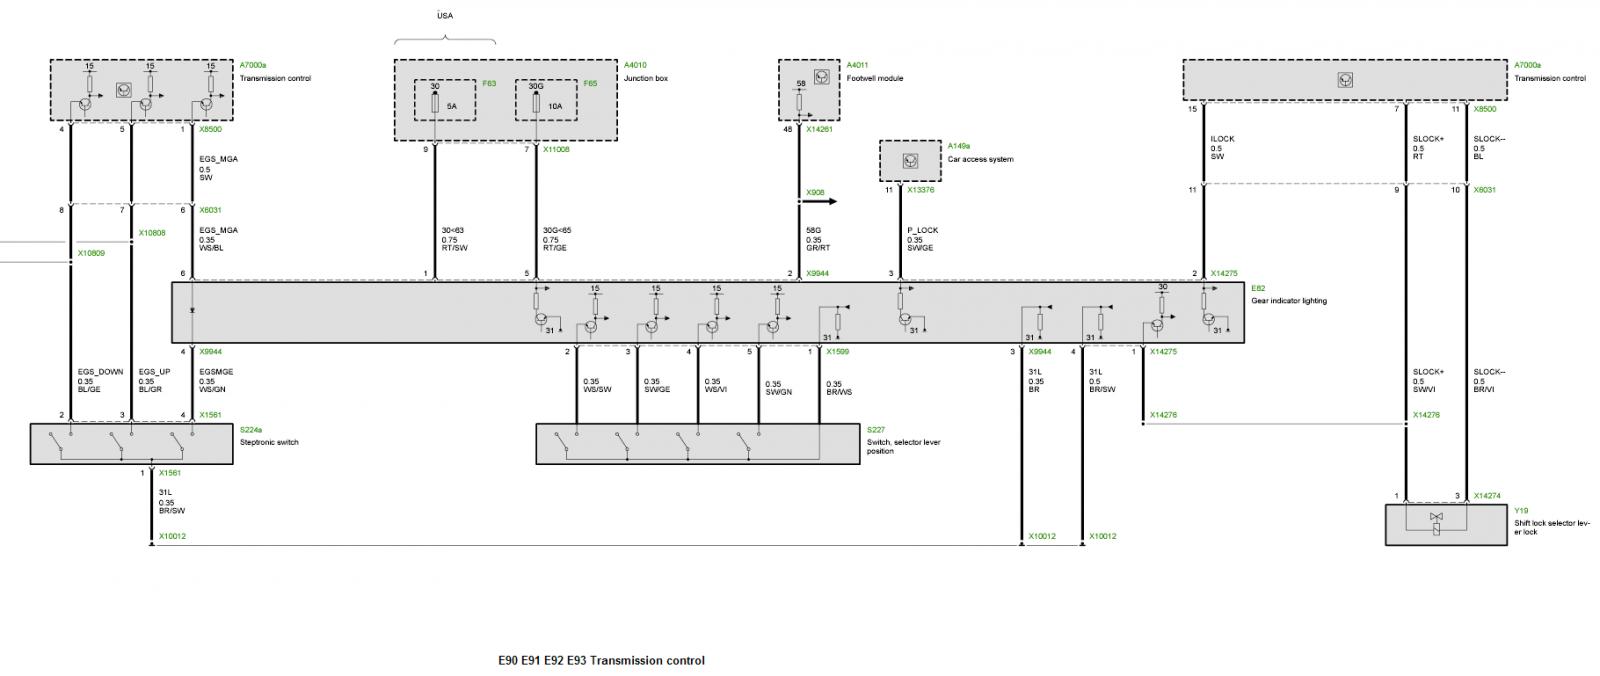 Bmw E90 Wiring Diagram Pdf download - Mandy Miller